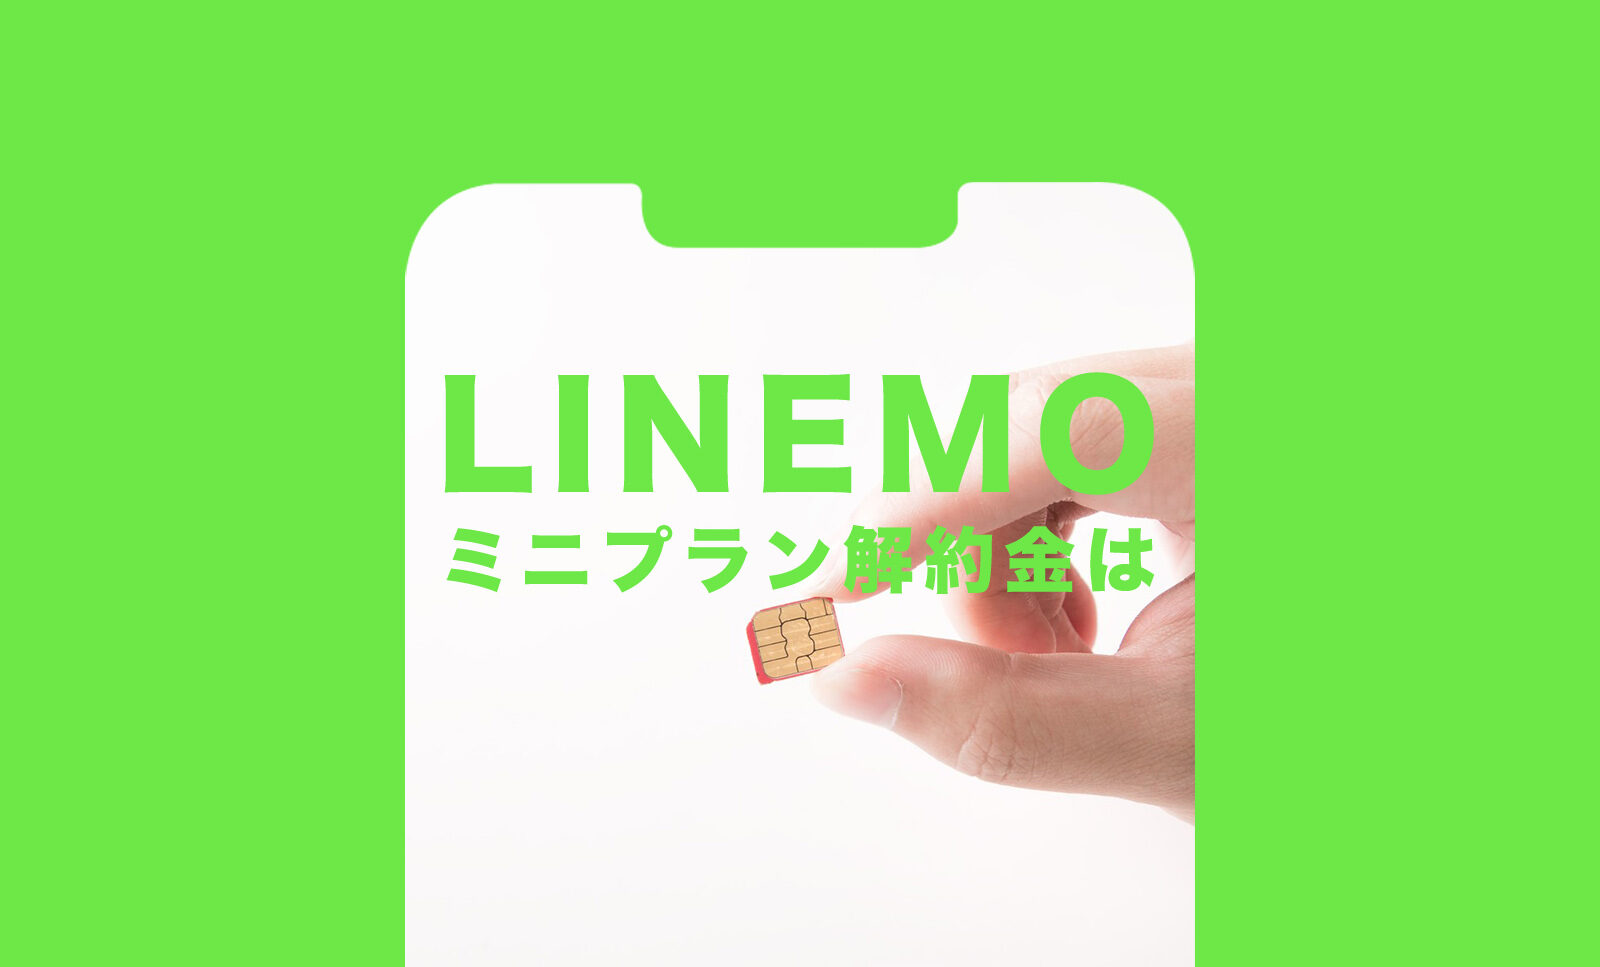 LINEMO(ラインモ)のミニプランで解約金&違約金等の手数料はかかる？のサムネイル画像